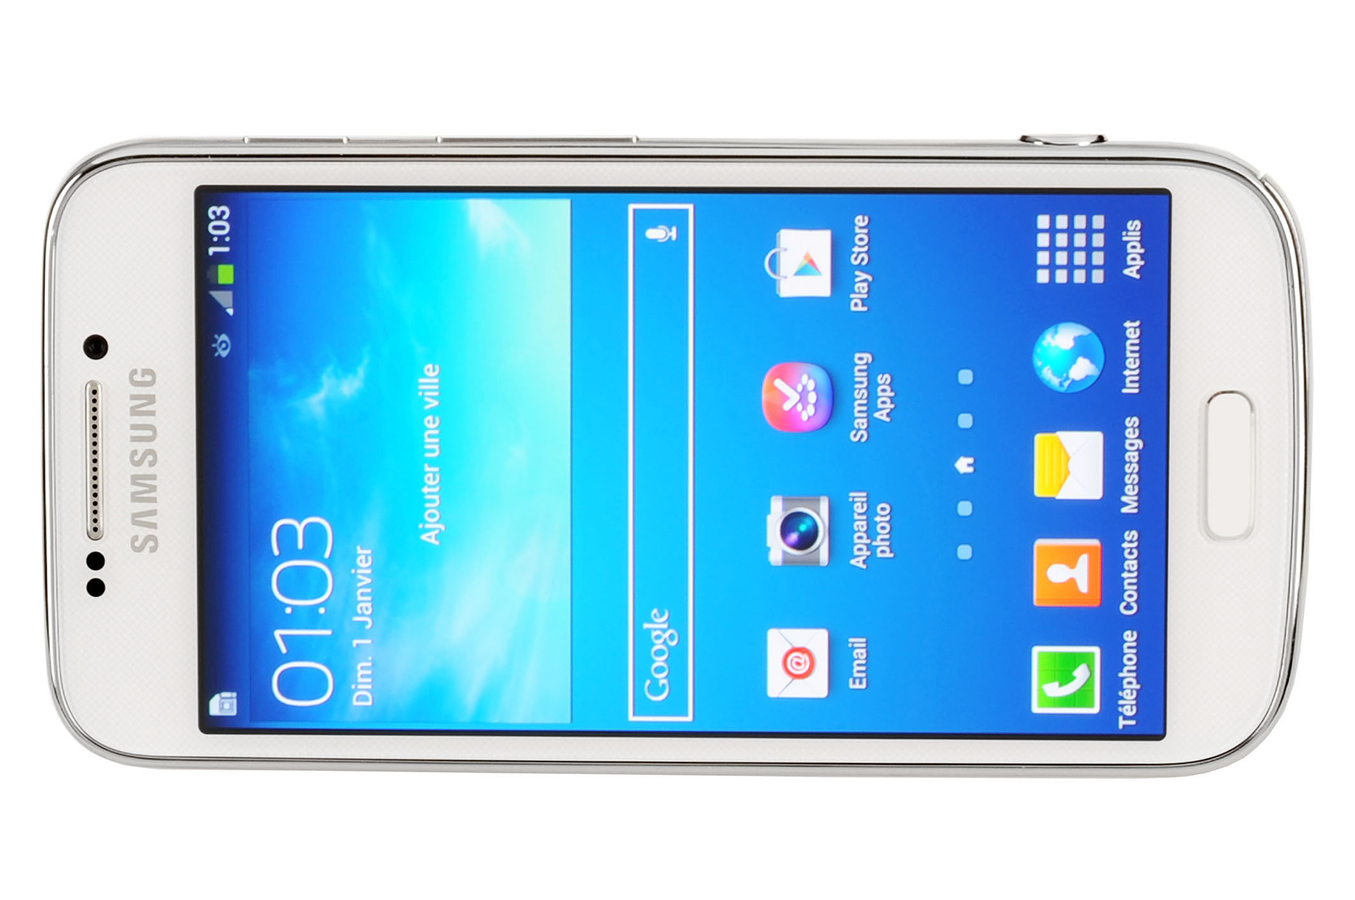 Appareil photo compact Samsung Galaxy S4 Zoom Blanc GALAXY S4 ZOOM